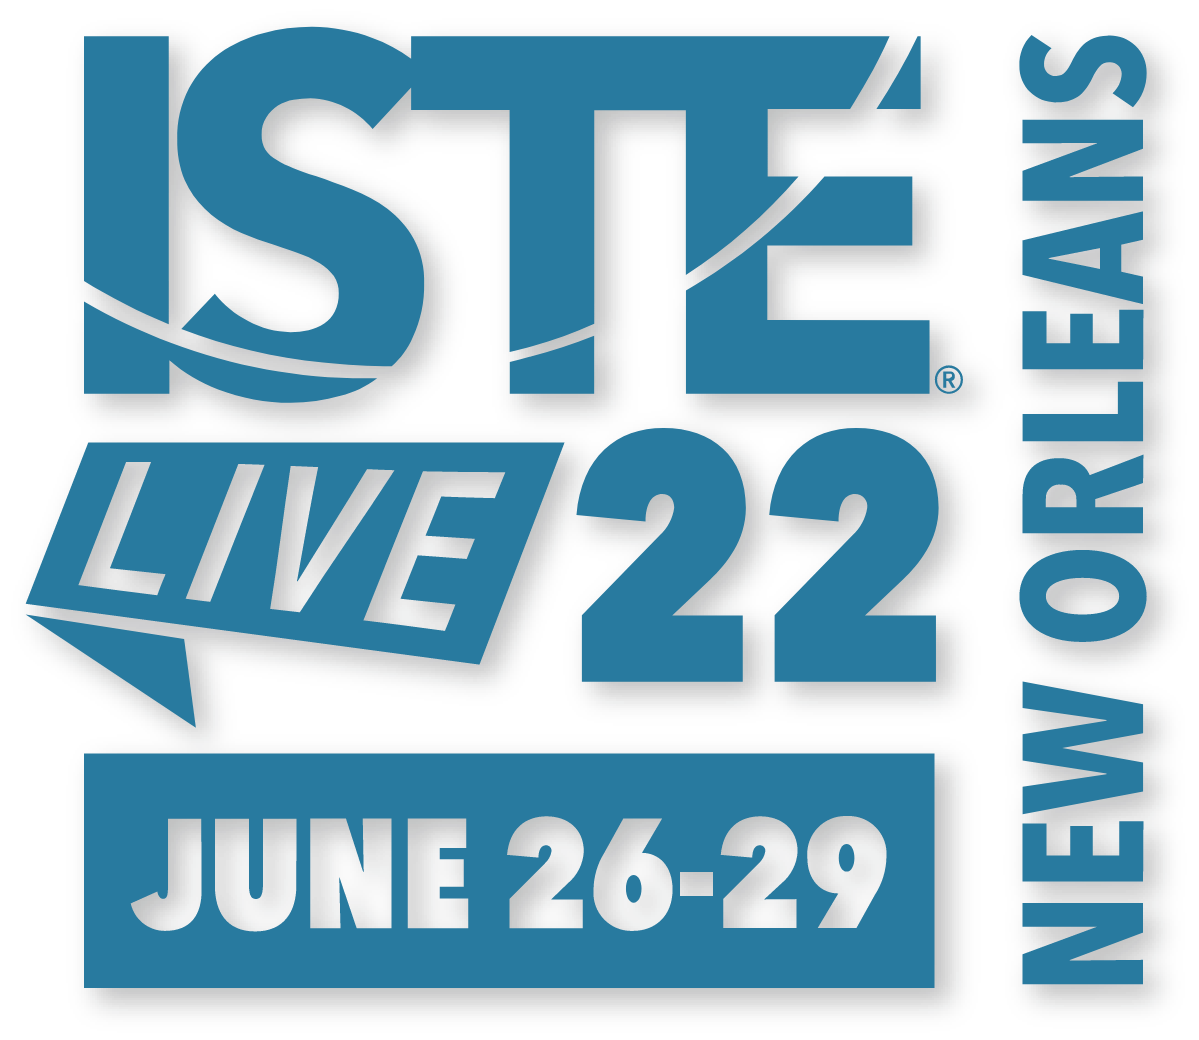 ISTE Live 2022 New Orleans June 26-29